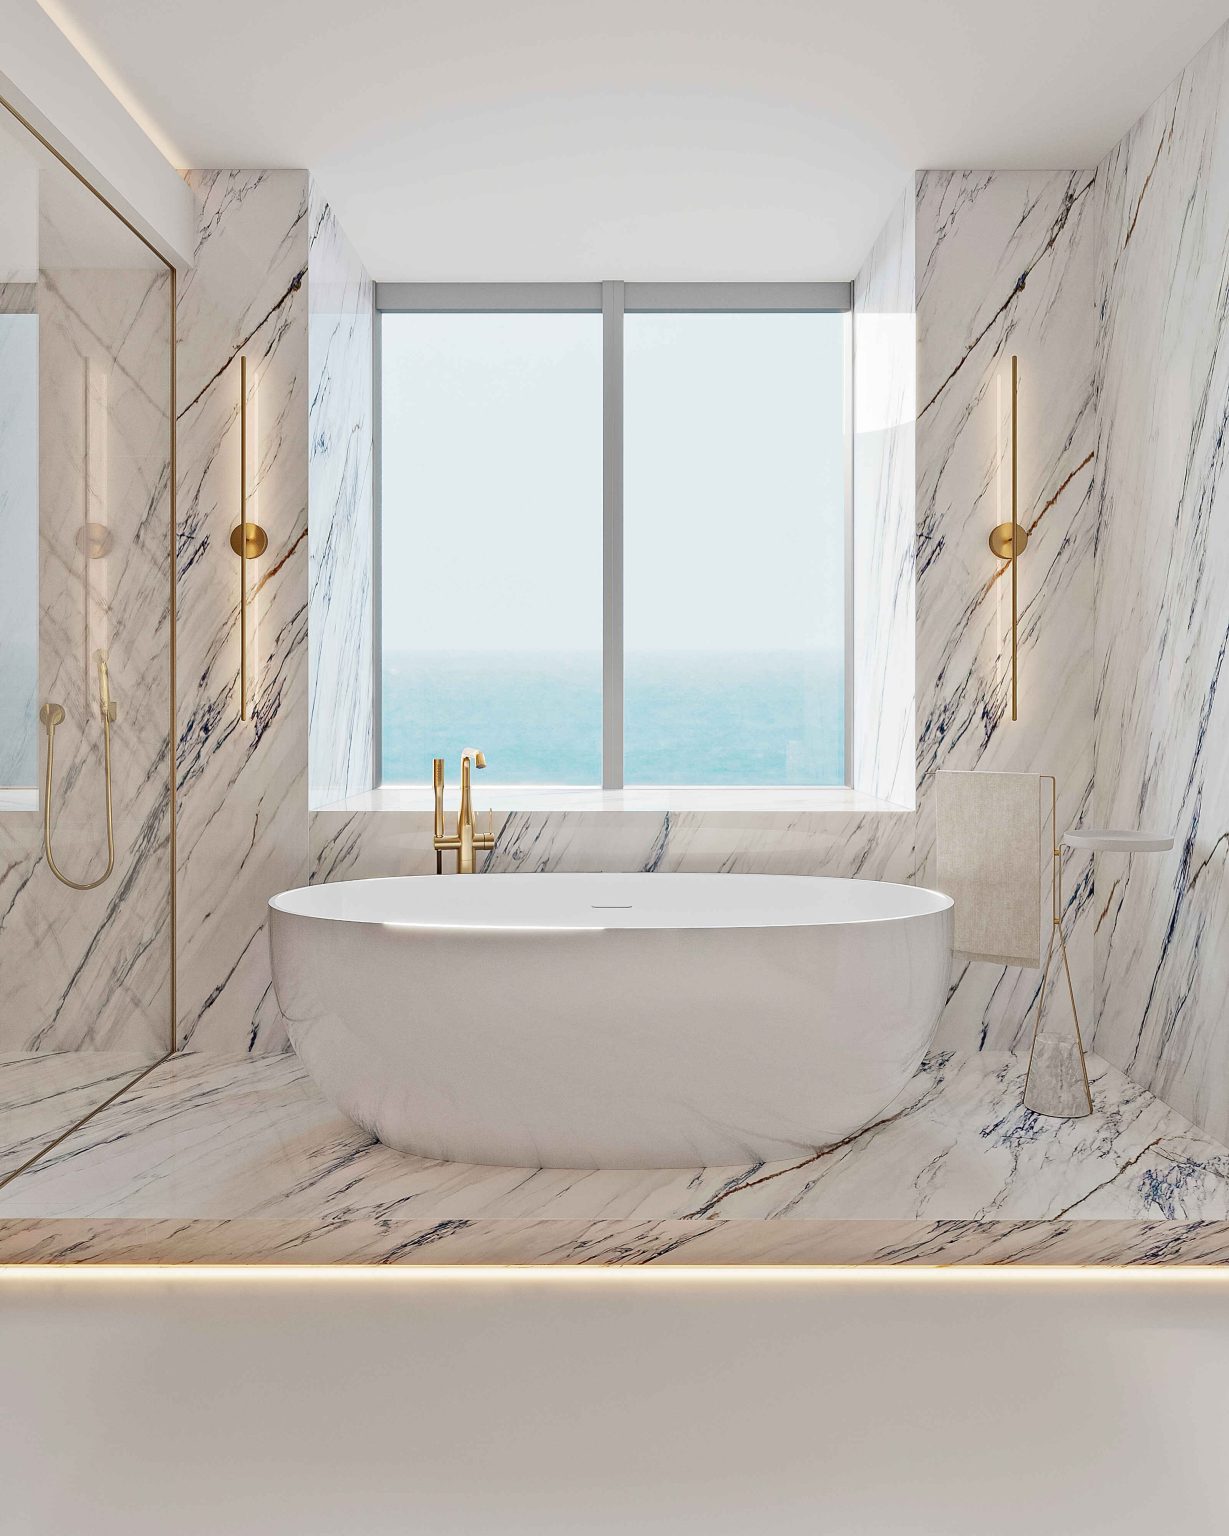 A contemporary minimalist bathroom designed by Natalia Starinova, showcasing simplicity and elegance in Miami